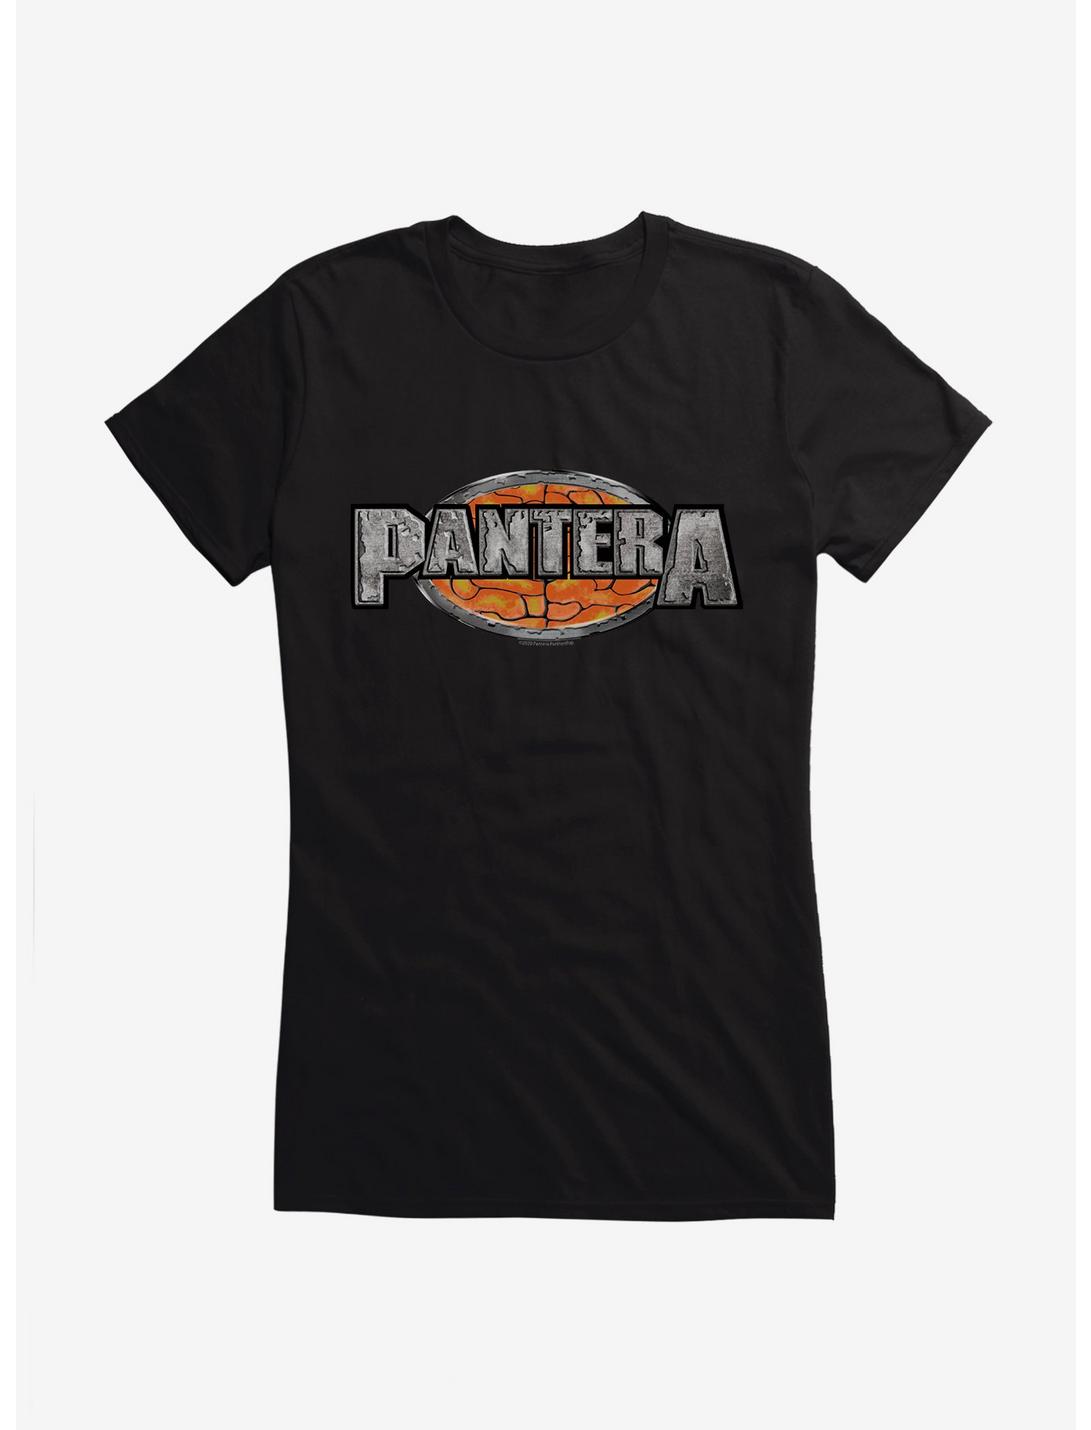 Pantera Reinventing The Steel Girls T-Shirt, BLACK, hi-res